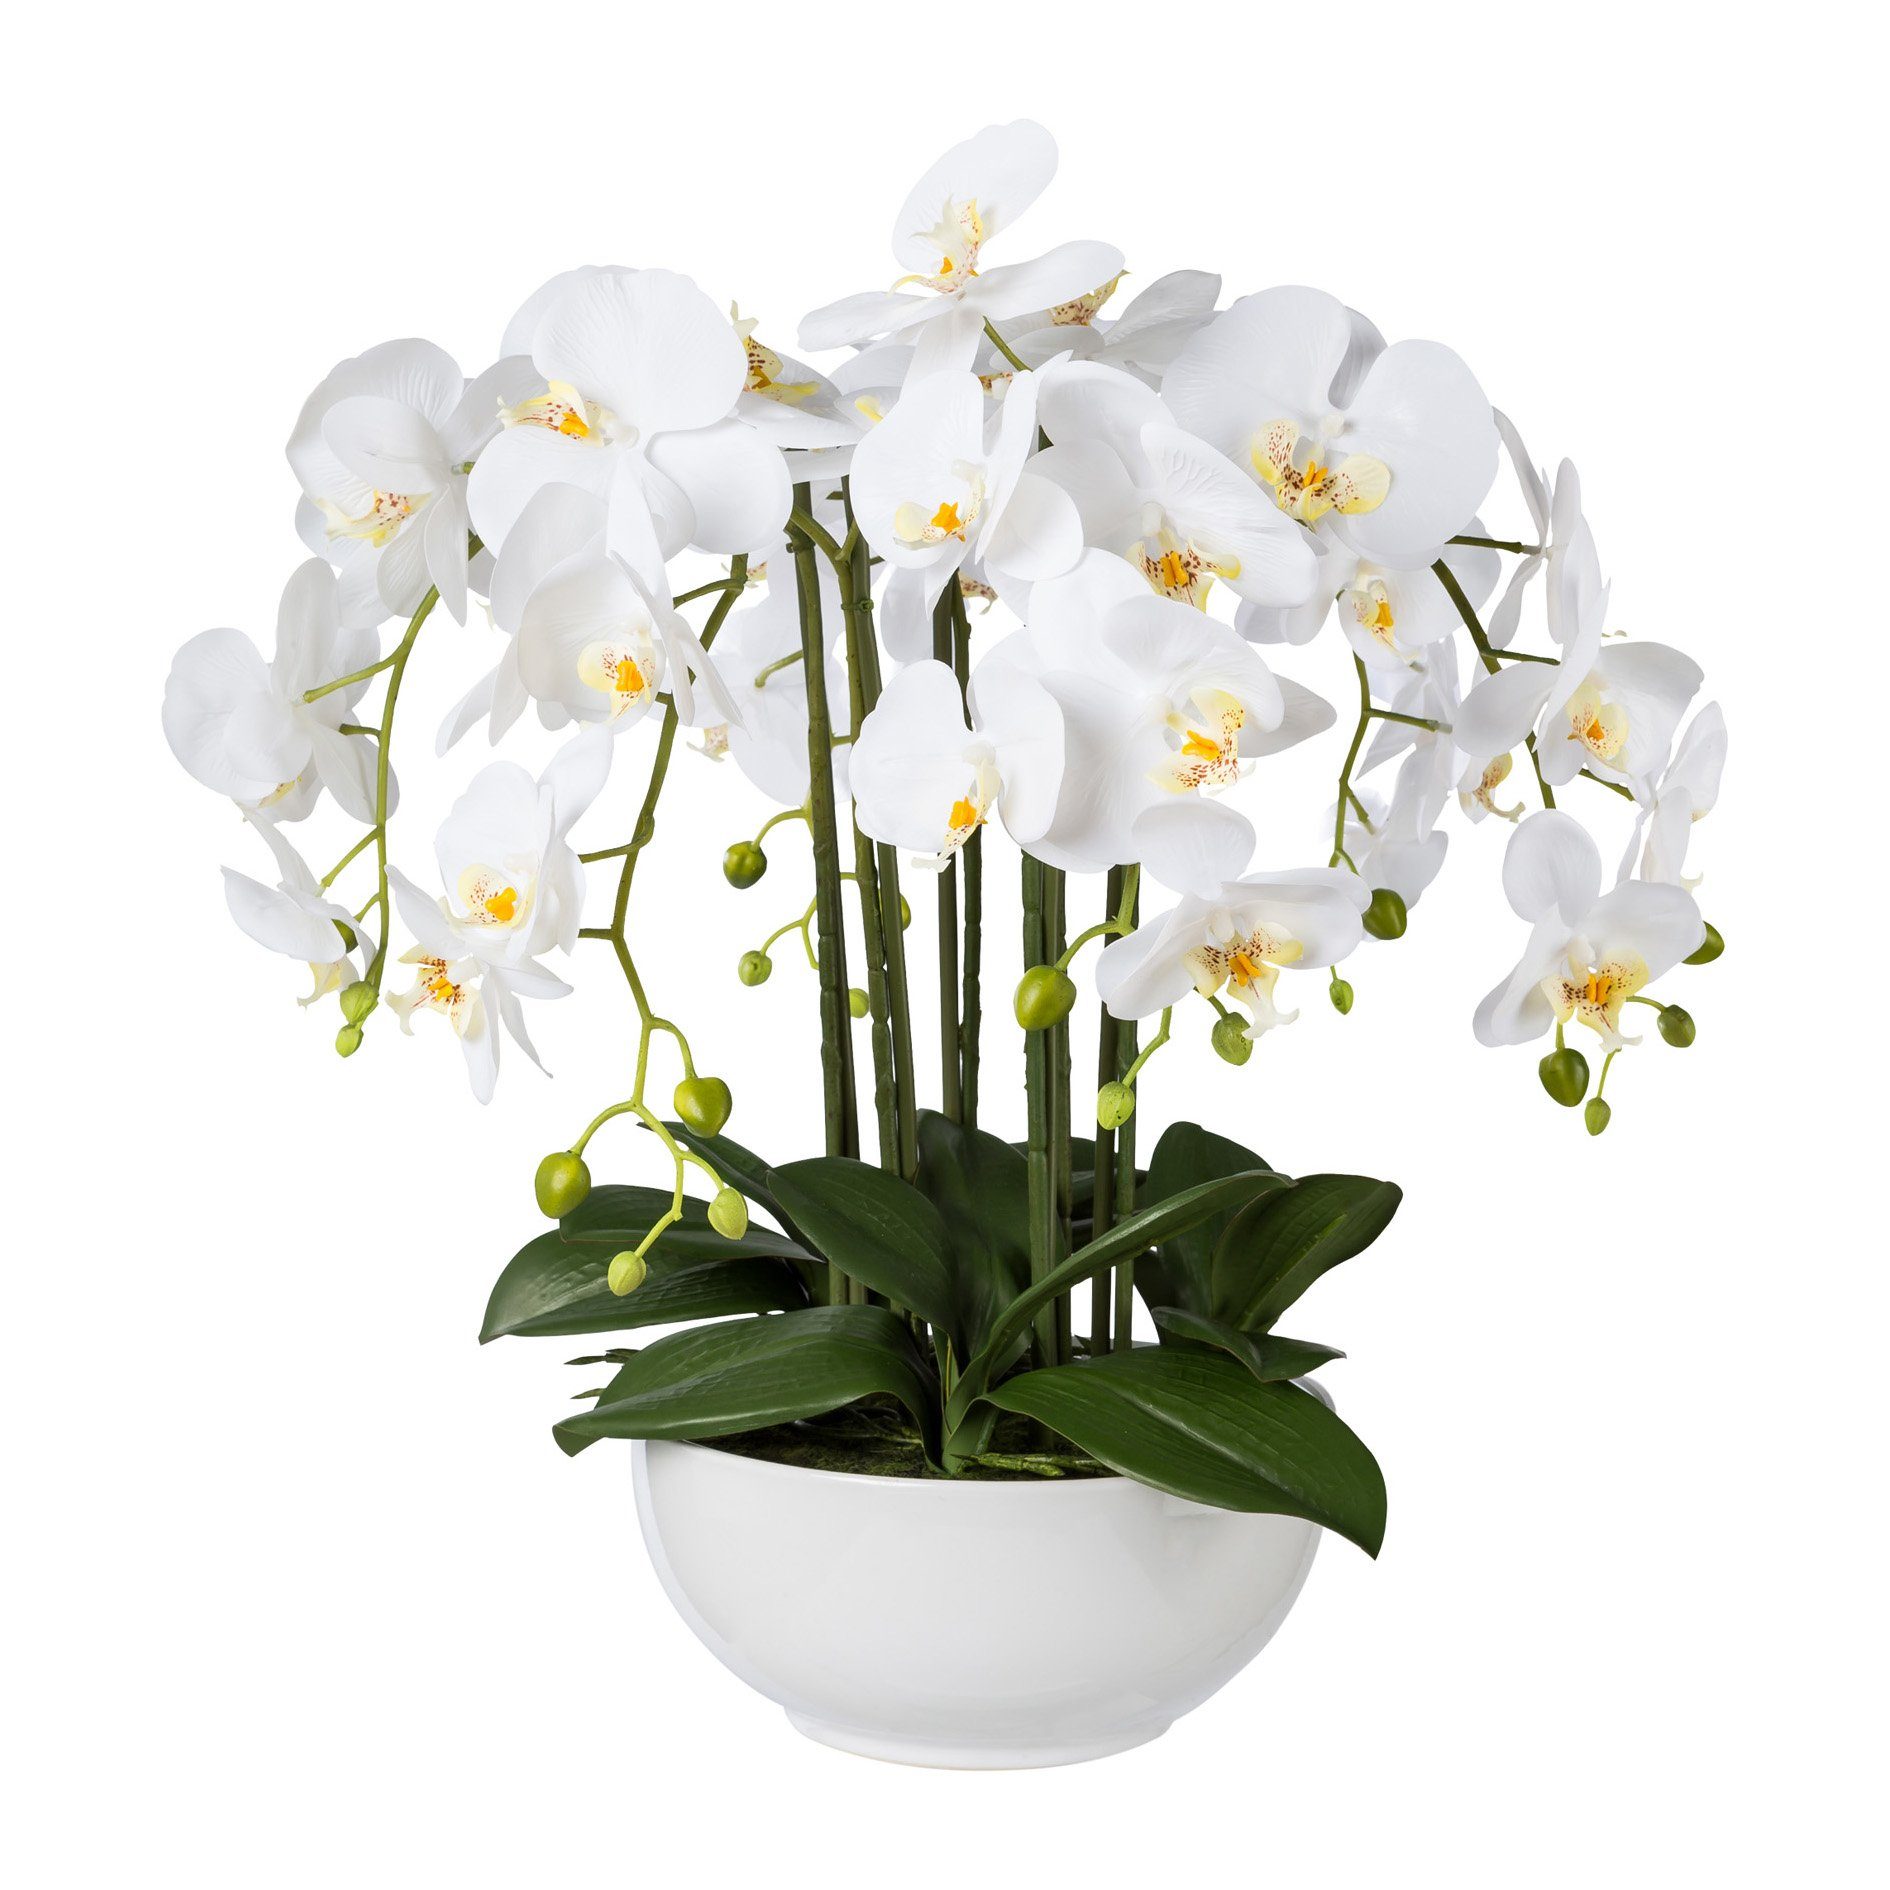 Keramik-Schale 54 Creativ weiß Kunstorchidee cm, Orchidee 54 Höhe Orchidee, green, Phalenopsis cm Kunstpflanze in